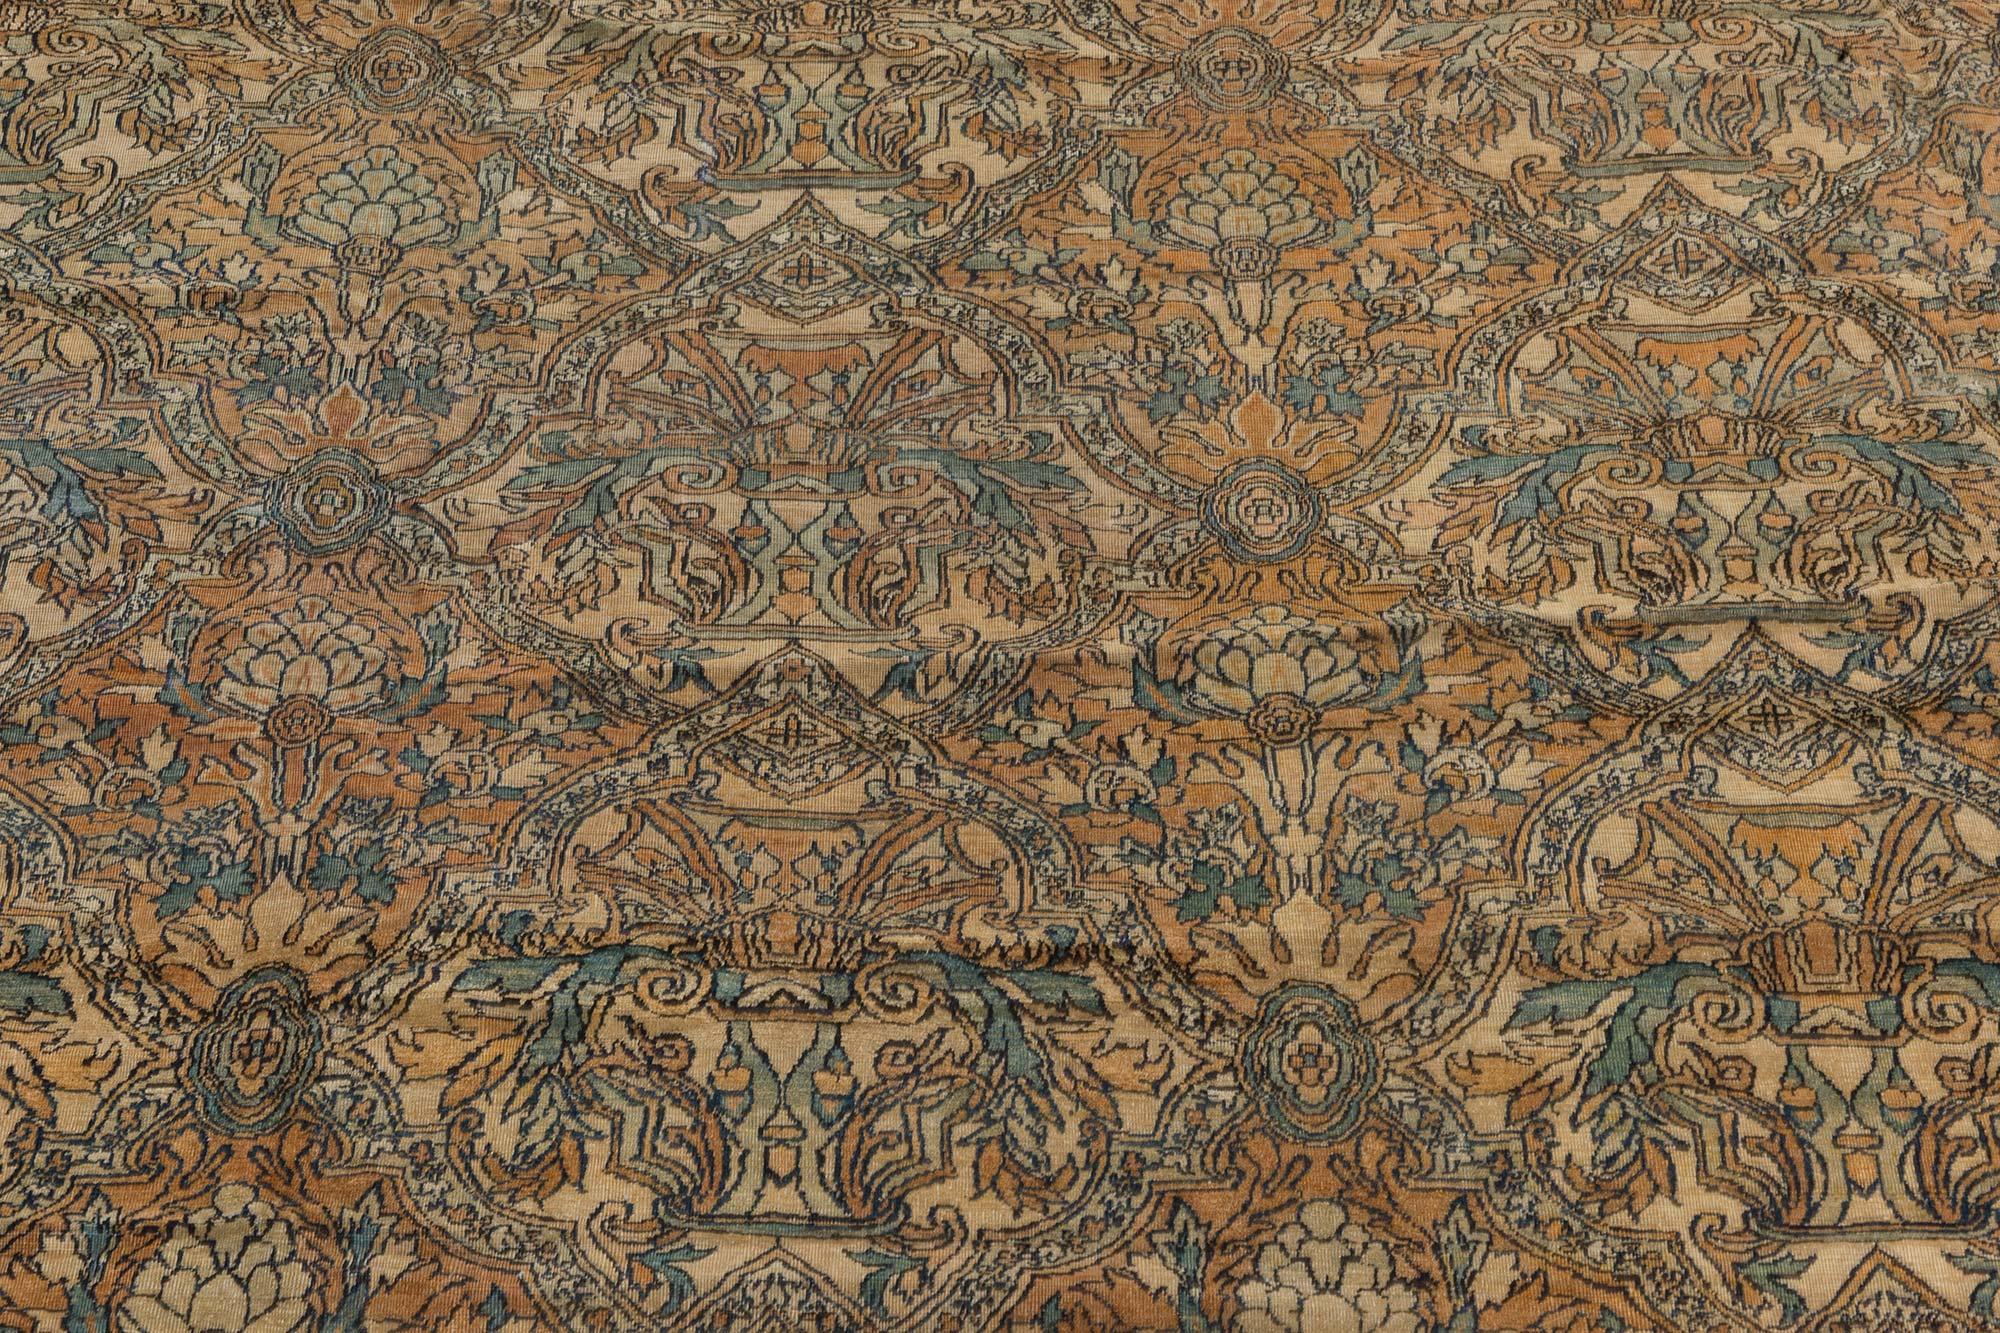 Authentic 19th century Persian Kirman handmade wool rug
Size: 11'9